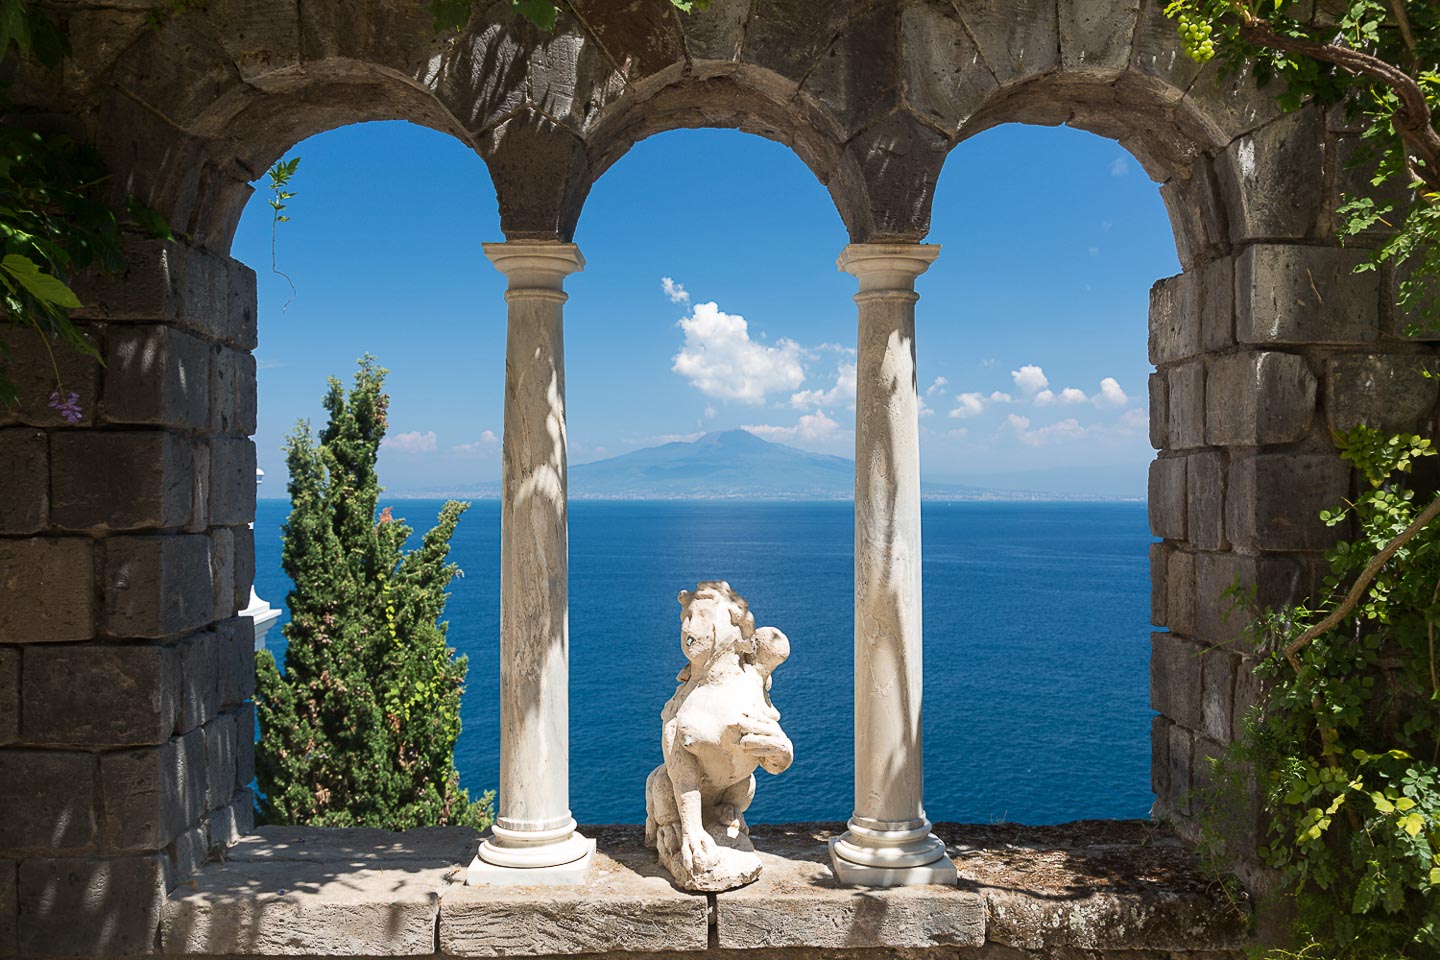 Villa Astor Amalfi paradise restored house luxury accommodation rental Sorrento Medditerranean sea view garden window view Mount Vesuvius Capri 22 1